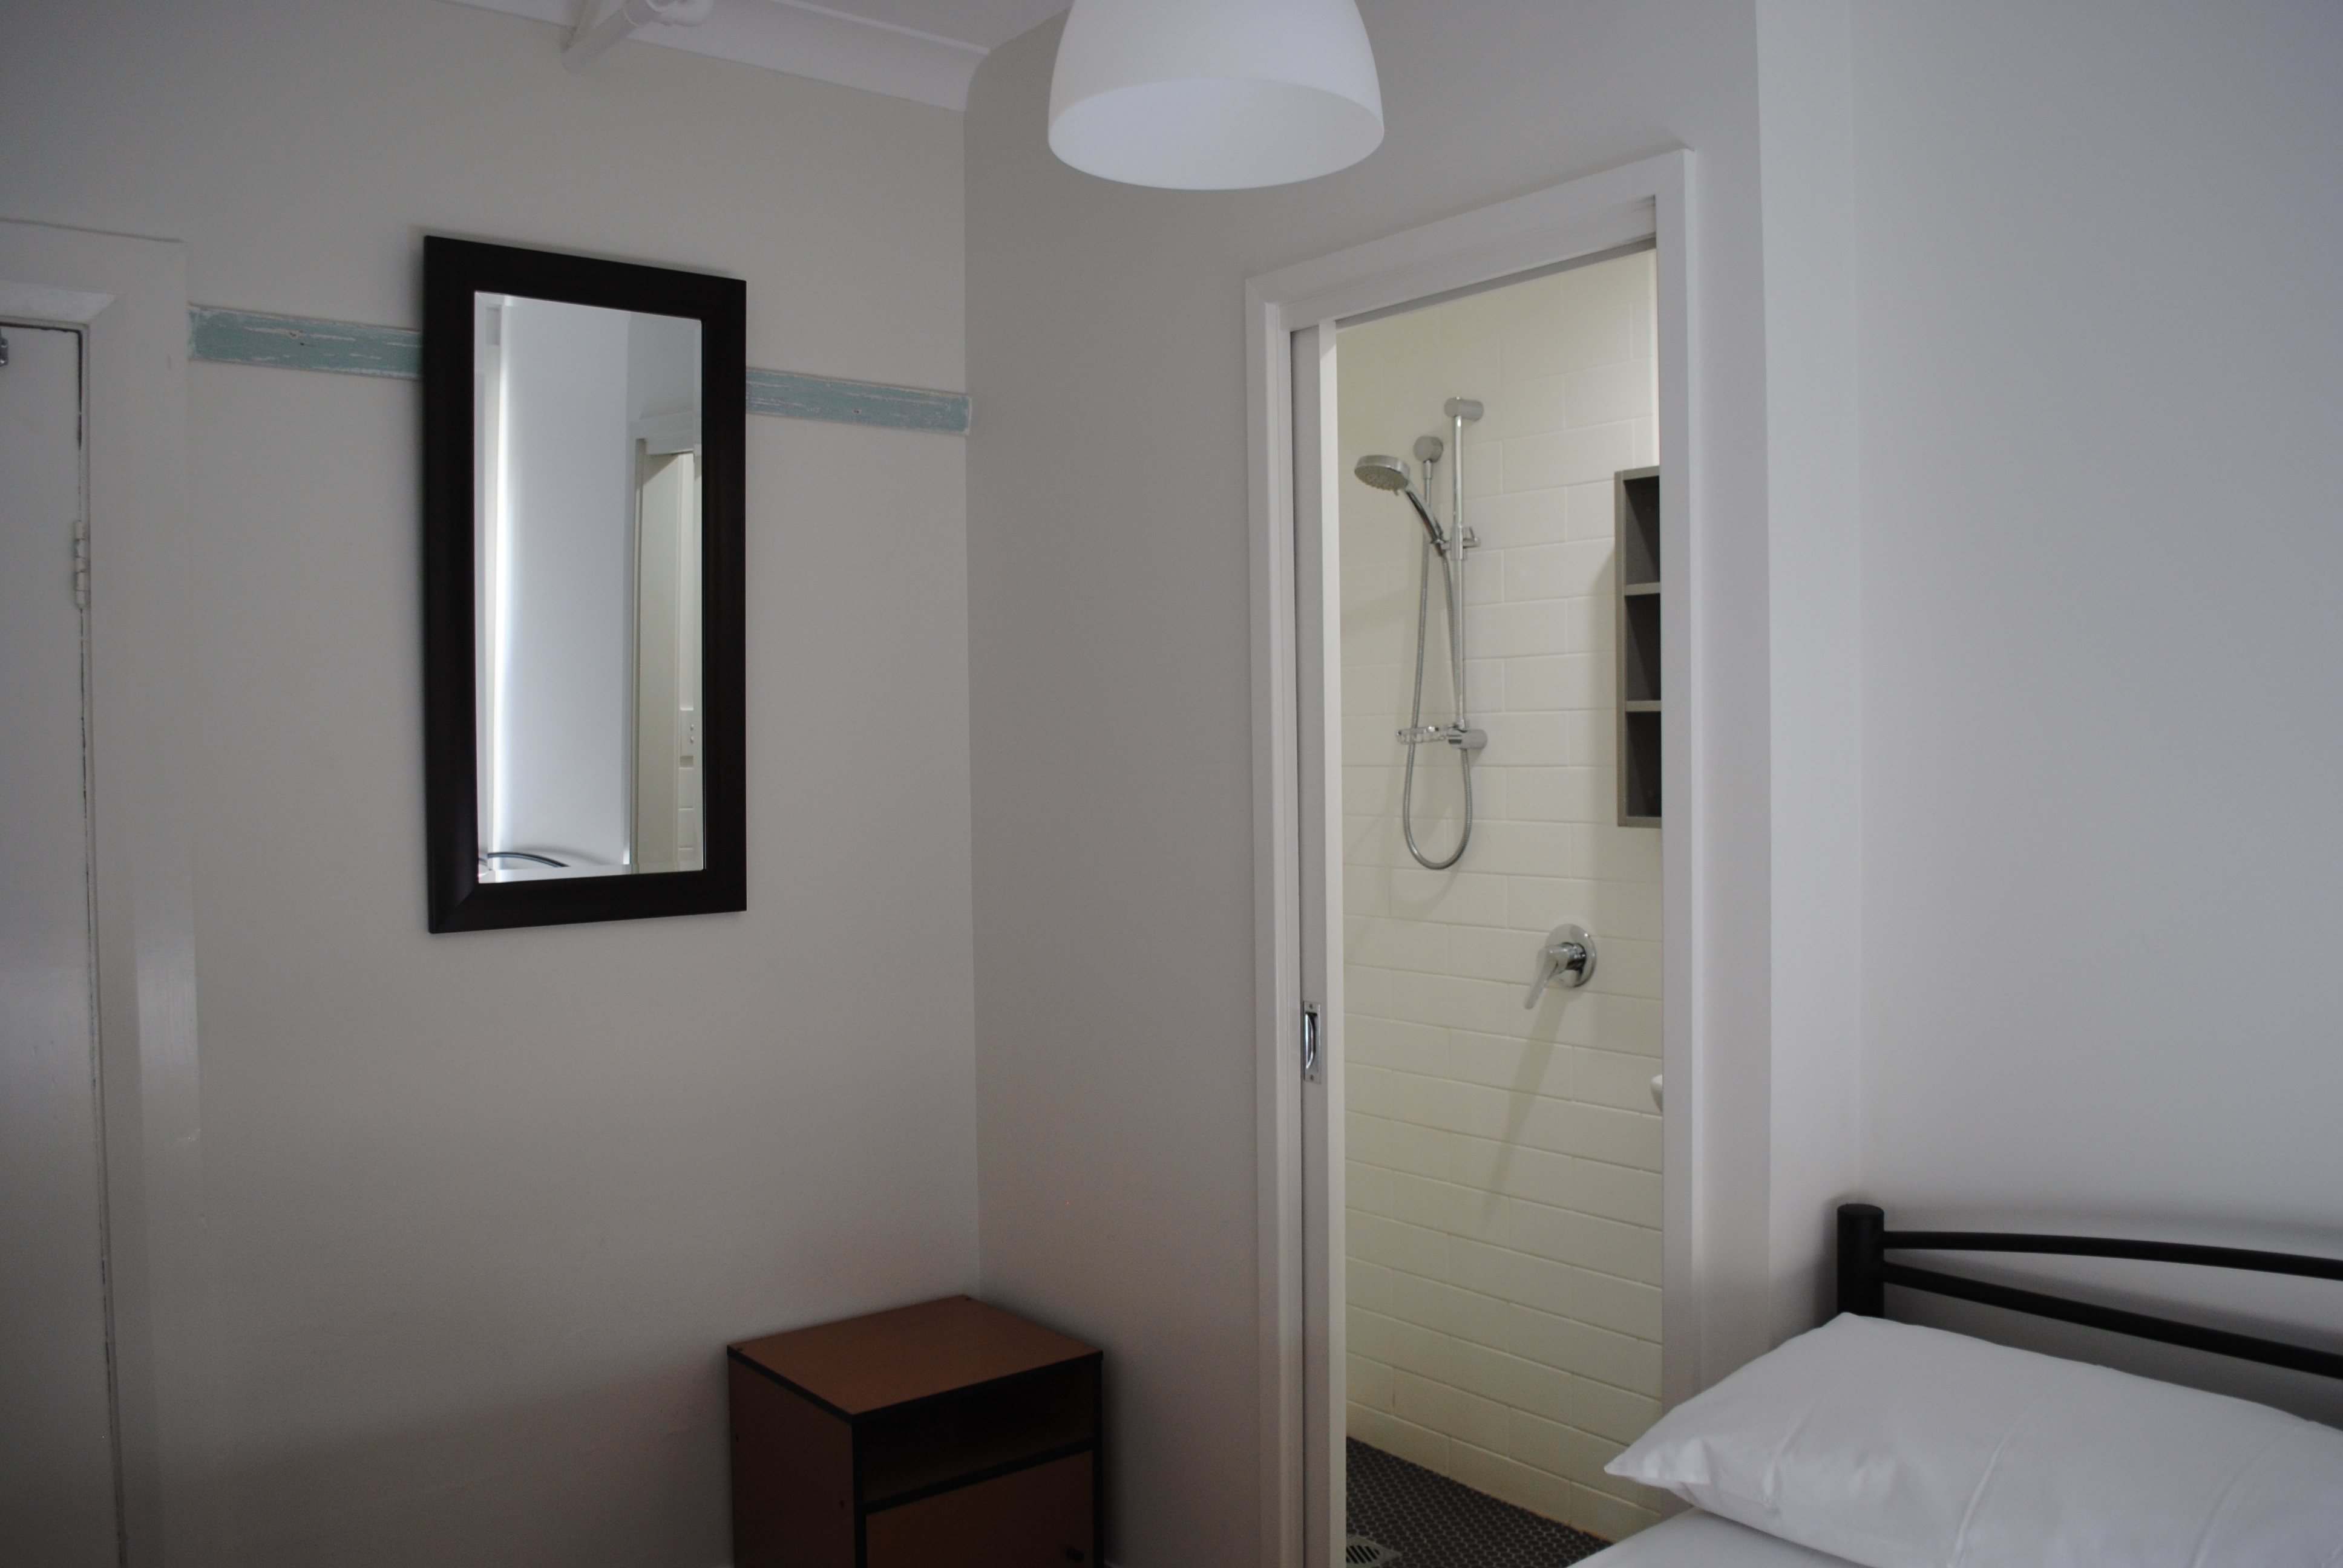 Highfield Private Hotel - Dalby Accommodation